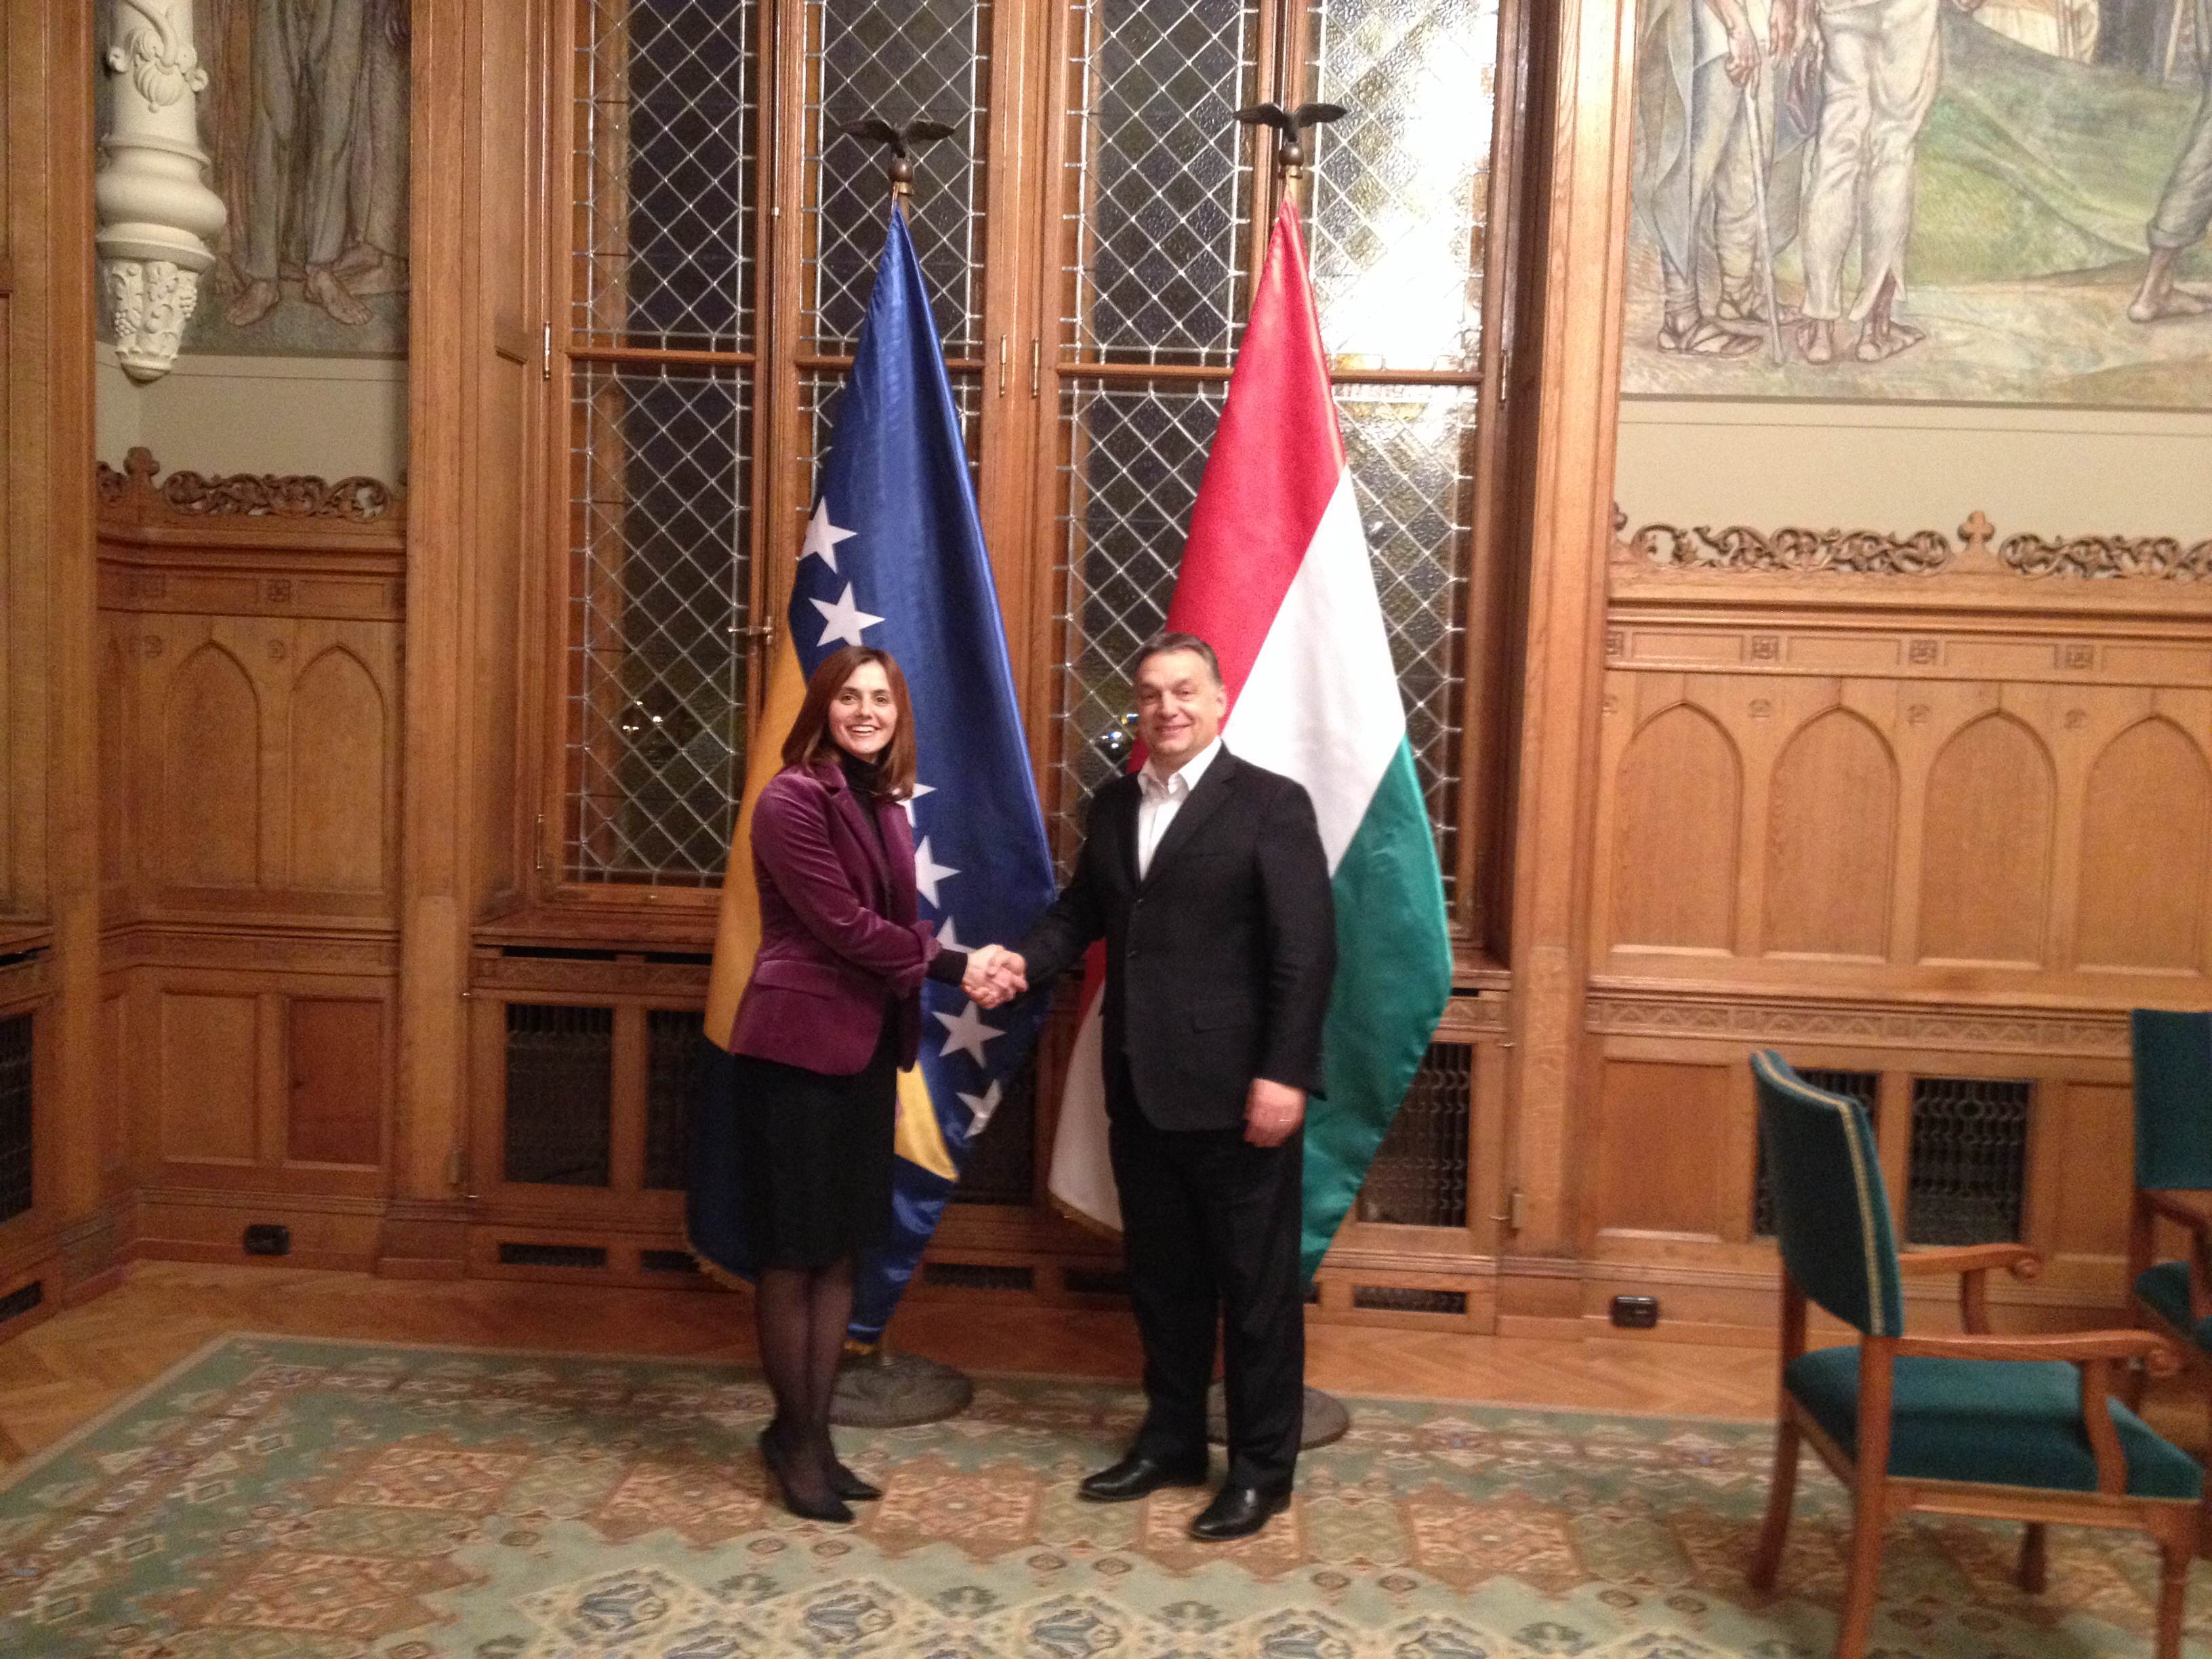 Picture for Zamjenica ministra na sastanku s premijerom Mađarske